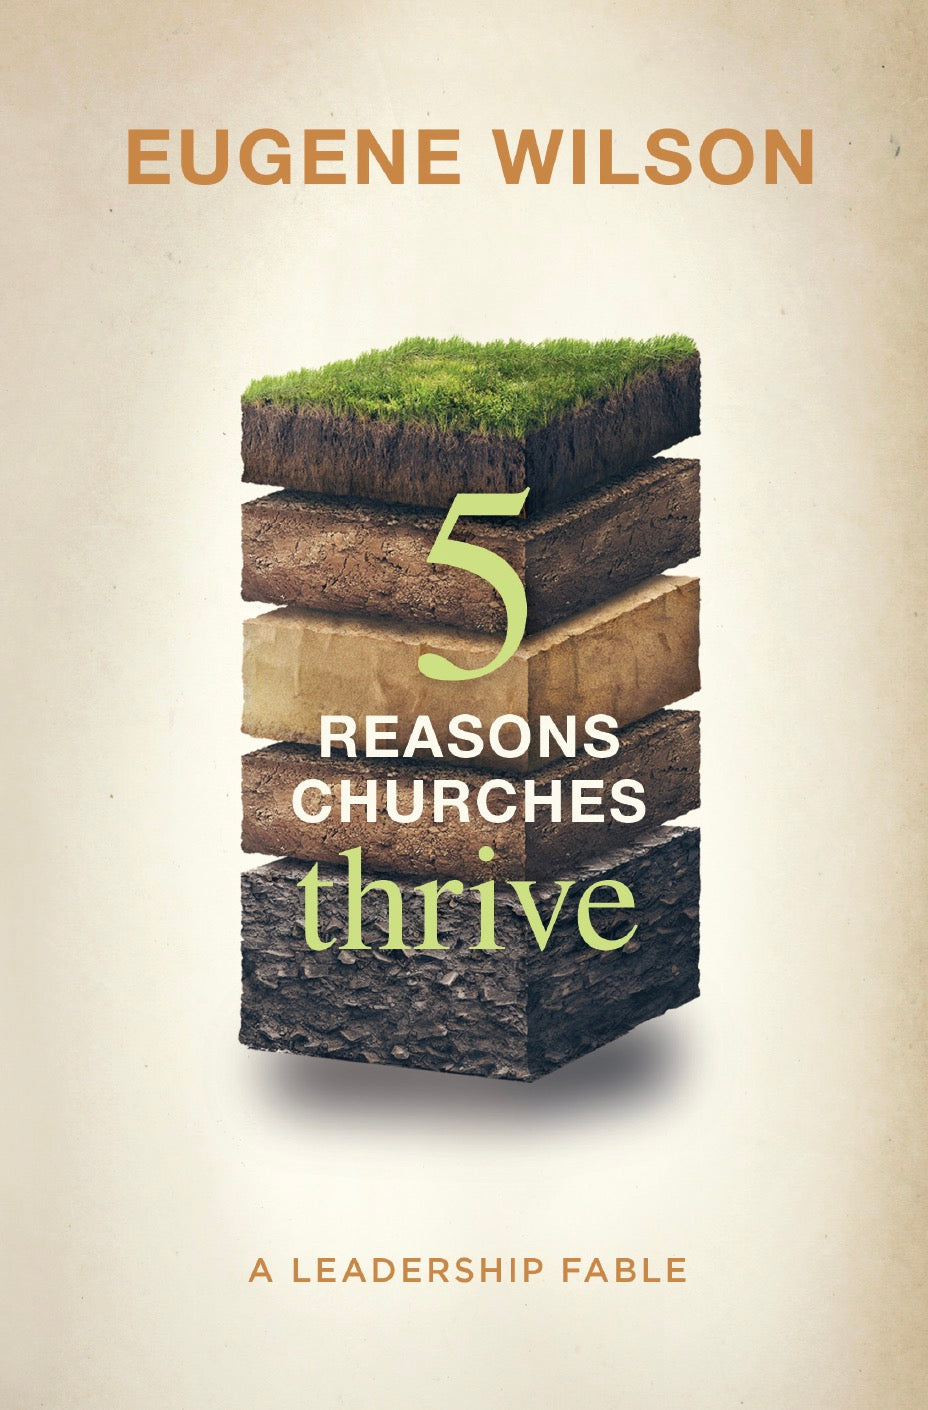 Churches　A　Fable　Publishing　Five　Leadership　Reasons　Thrive:　Pentecostal　House